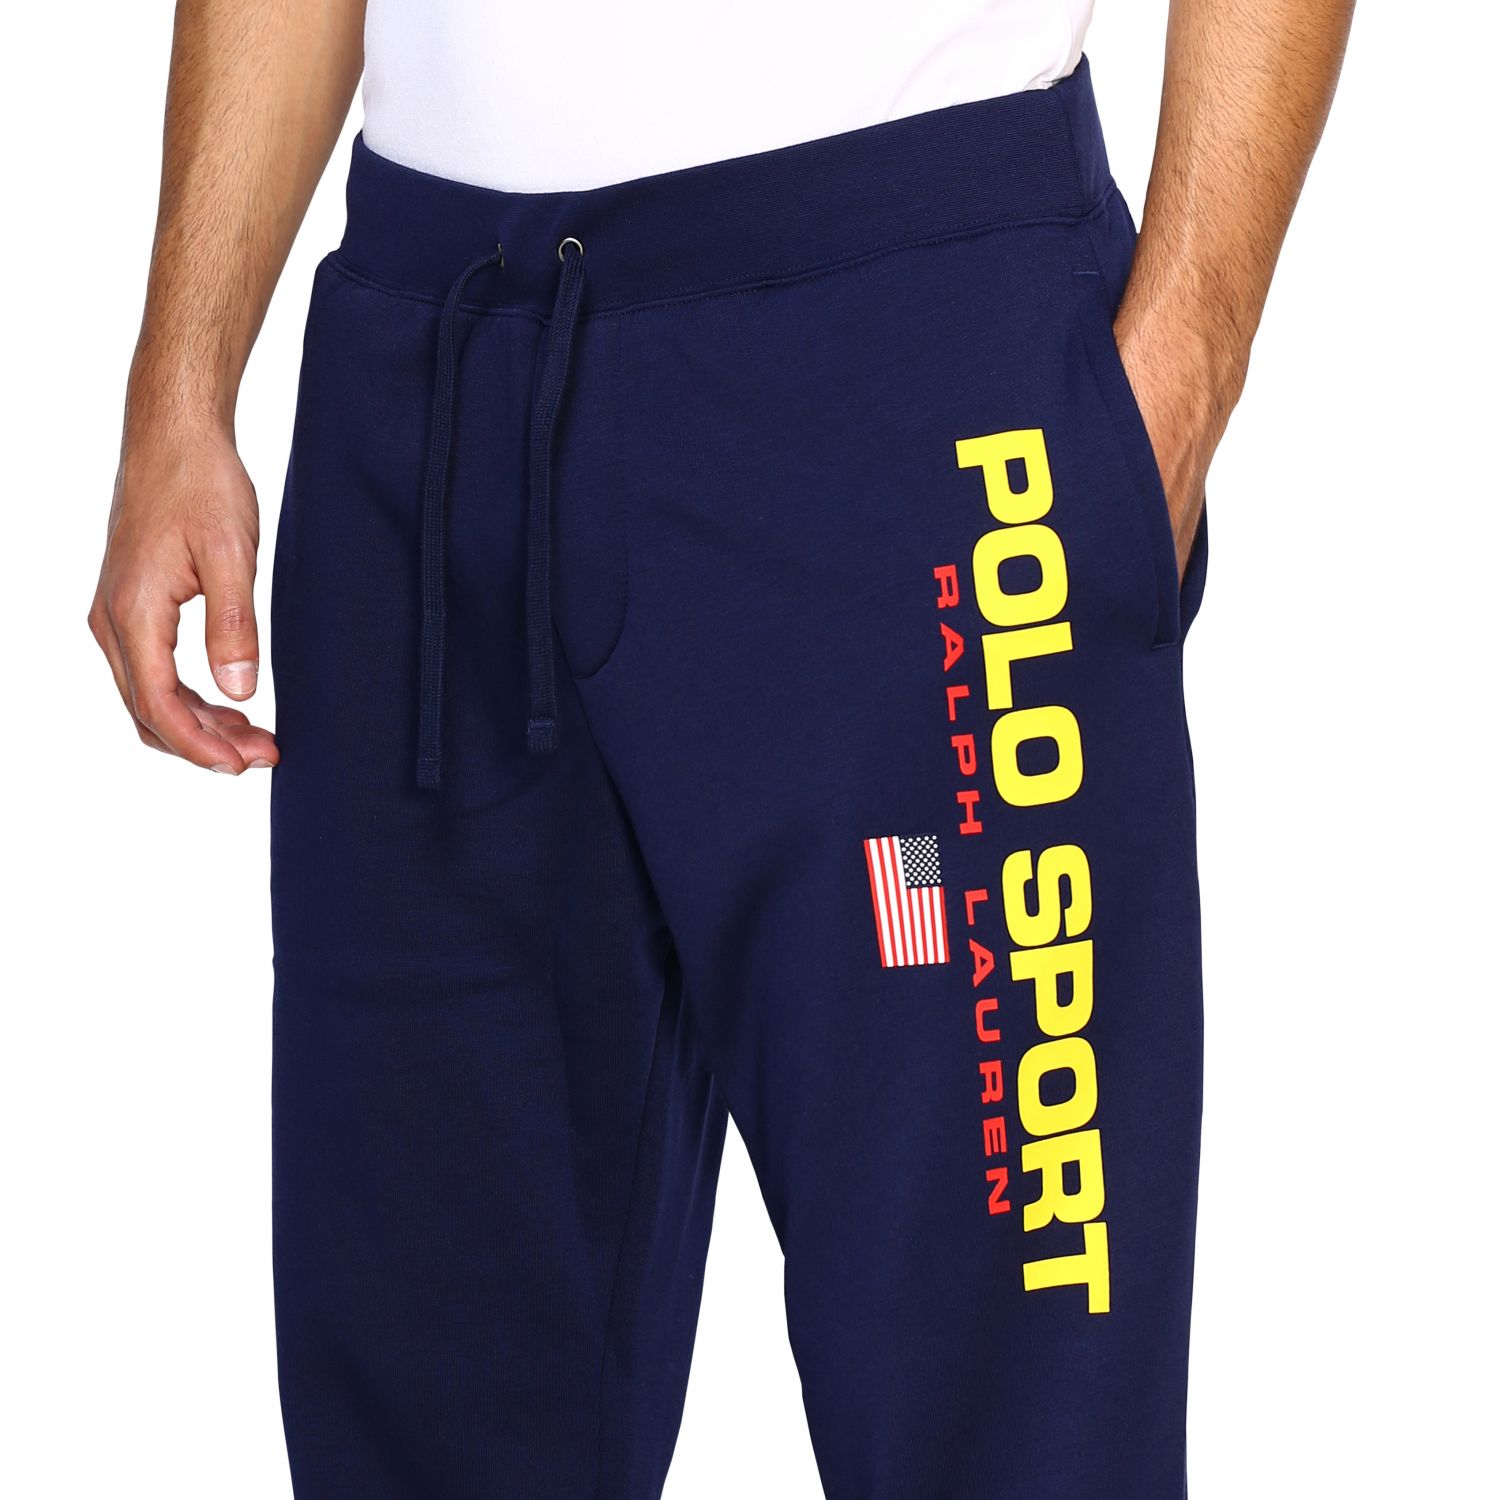 Polo Ralph Lauren Outlet: pants for man - Blue | Polo Ralph Lauren pants  710770023 online on 